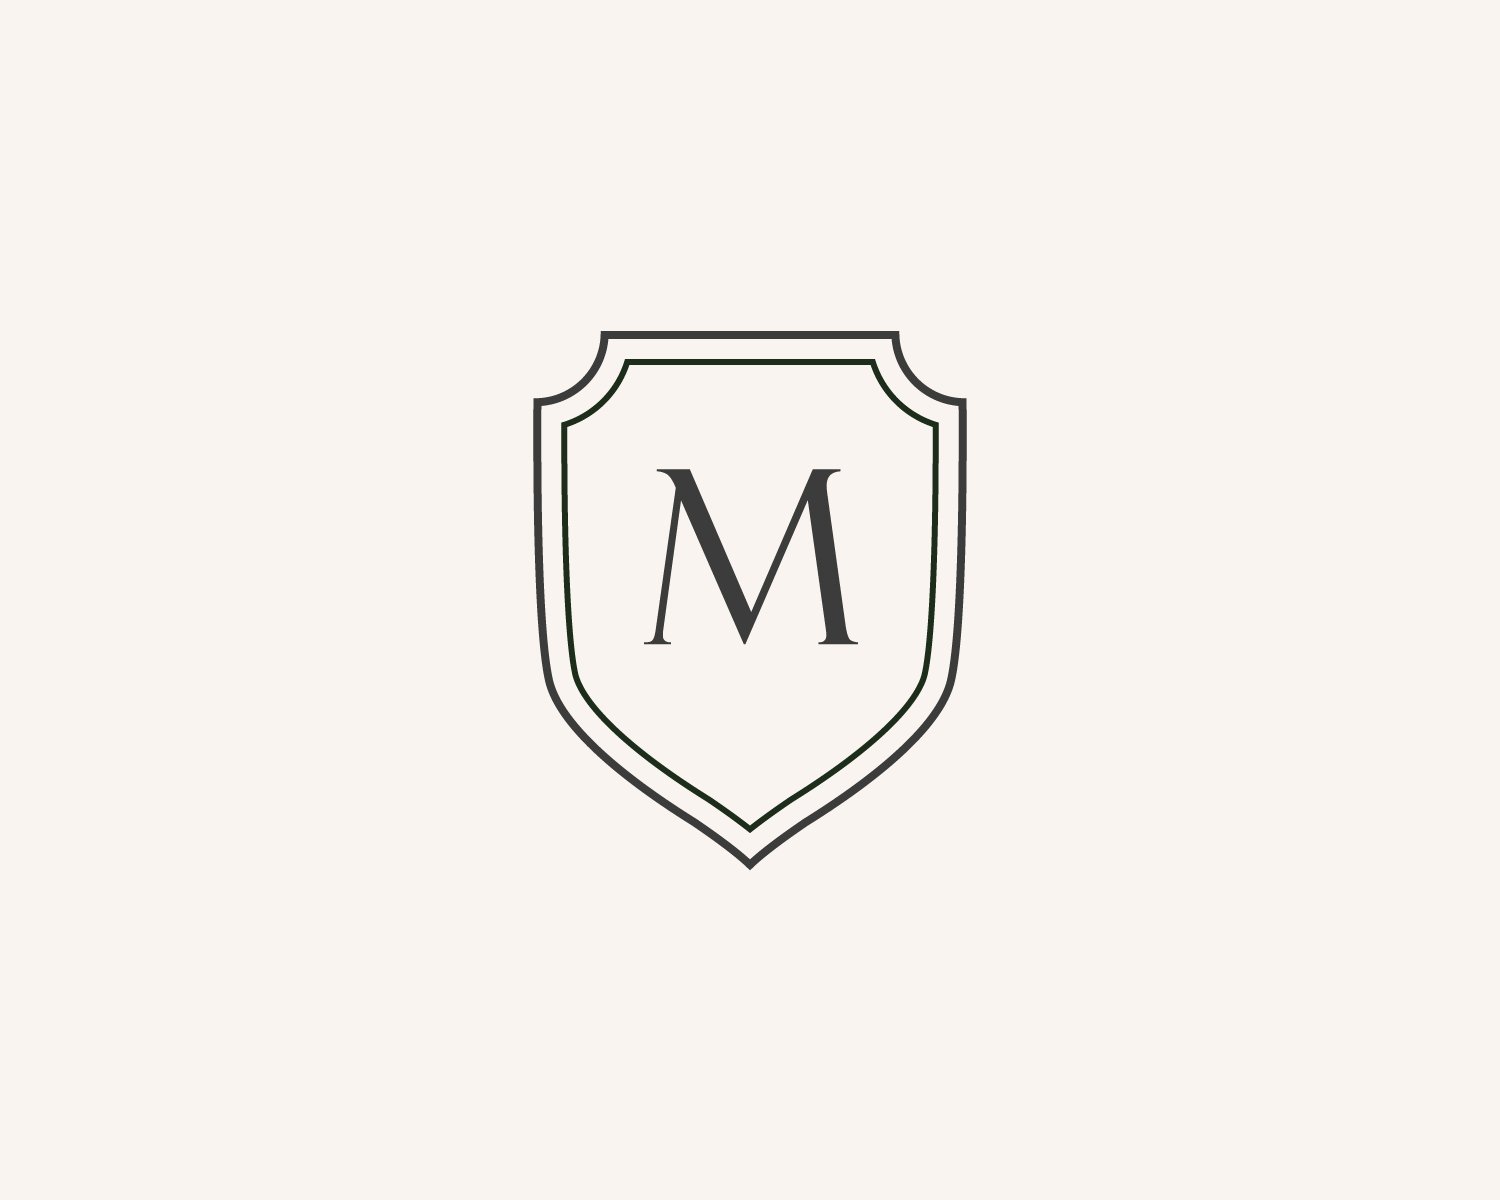 Madrina-Miniature-Cattle-Company-logo-#1B2.jpeg